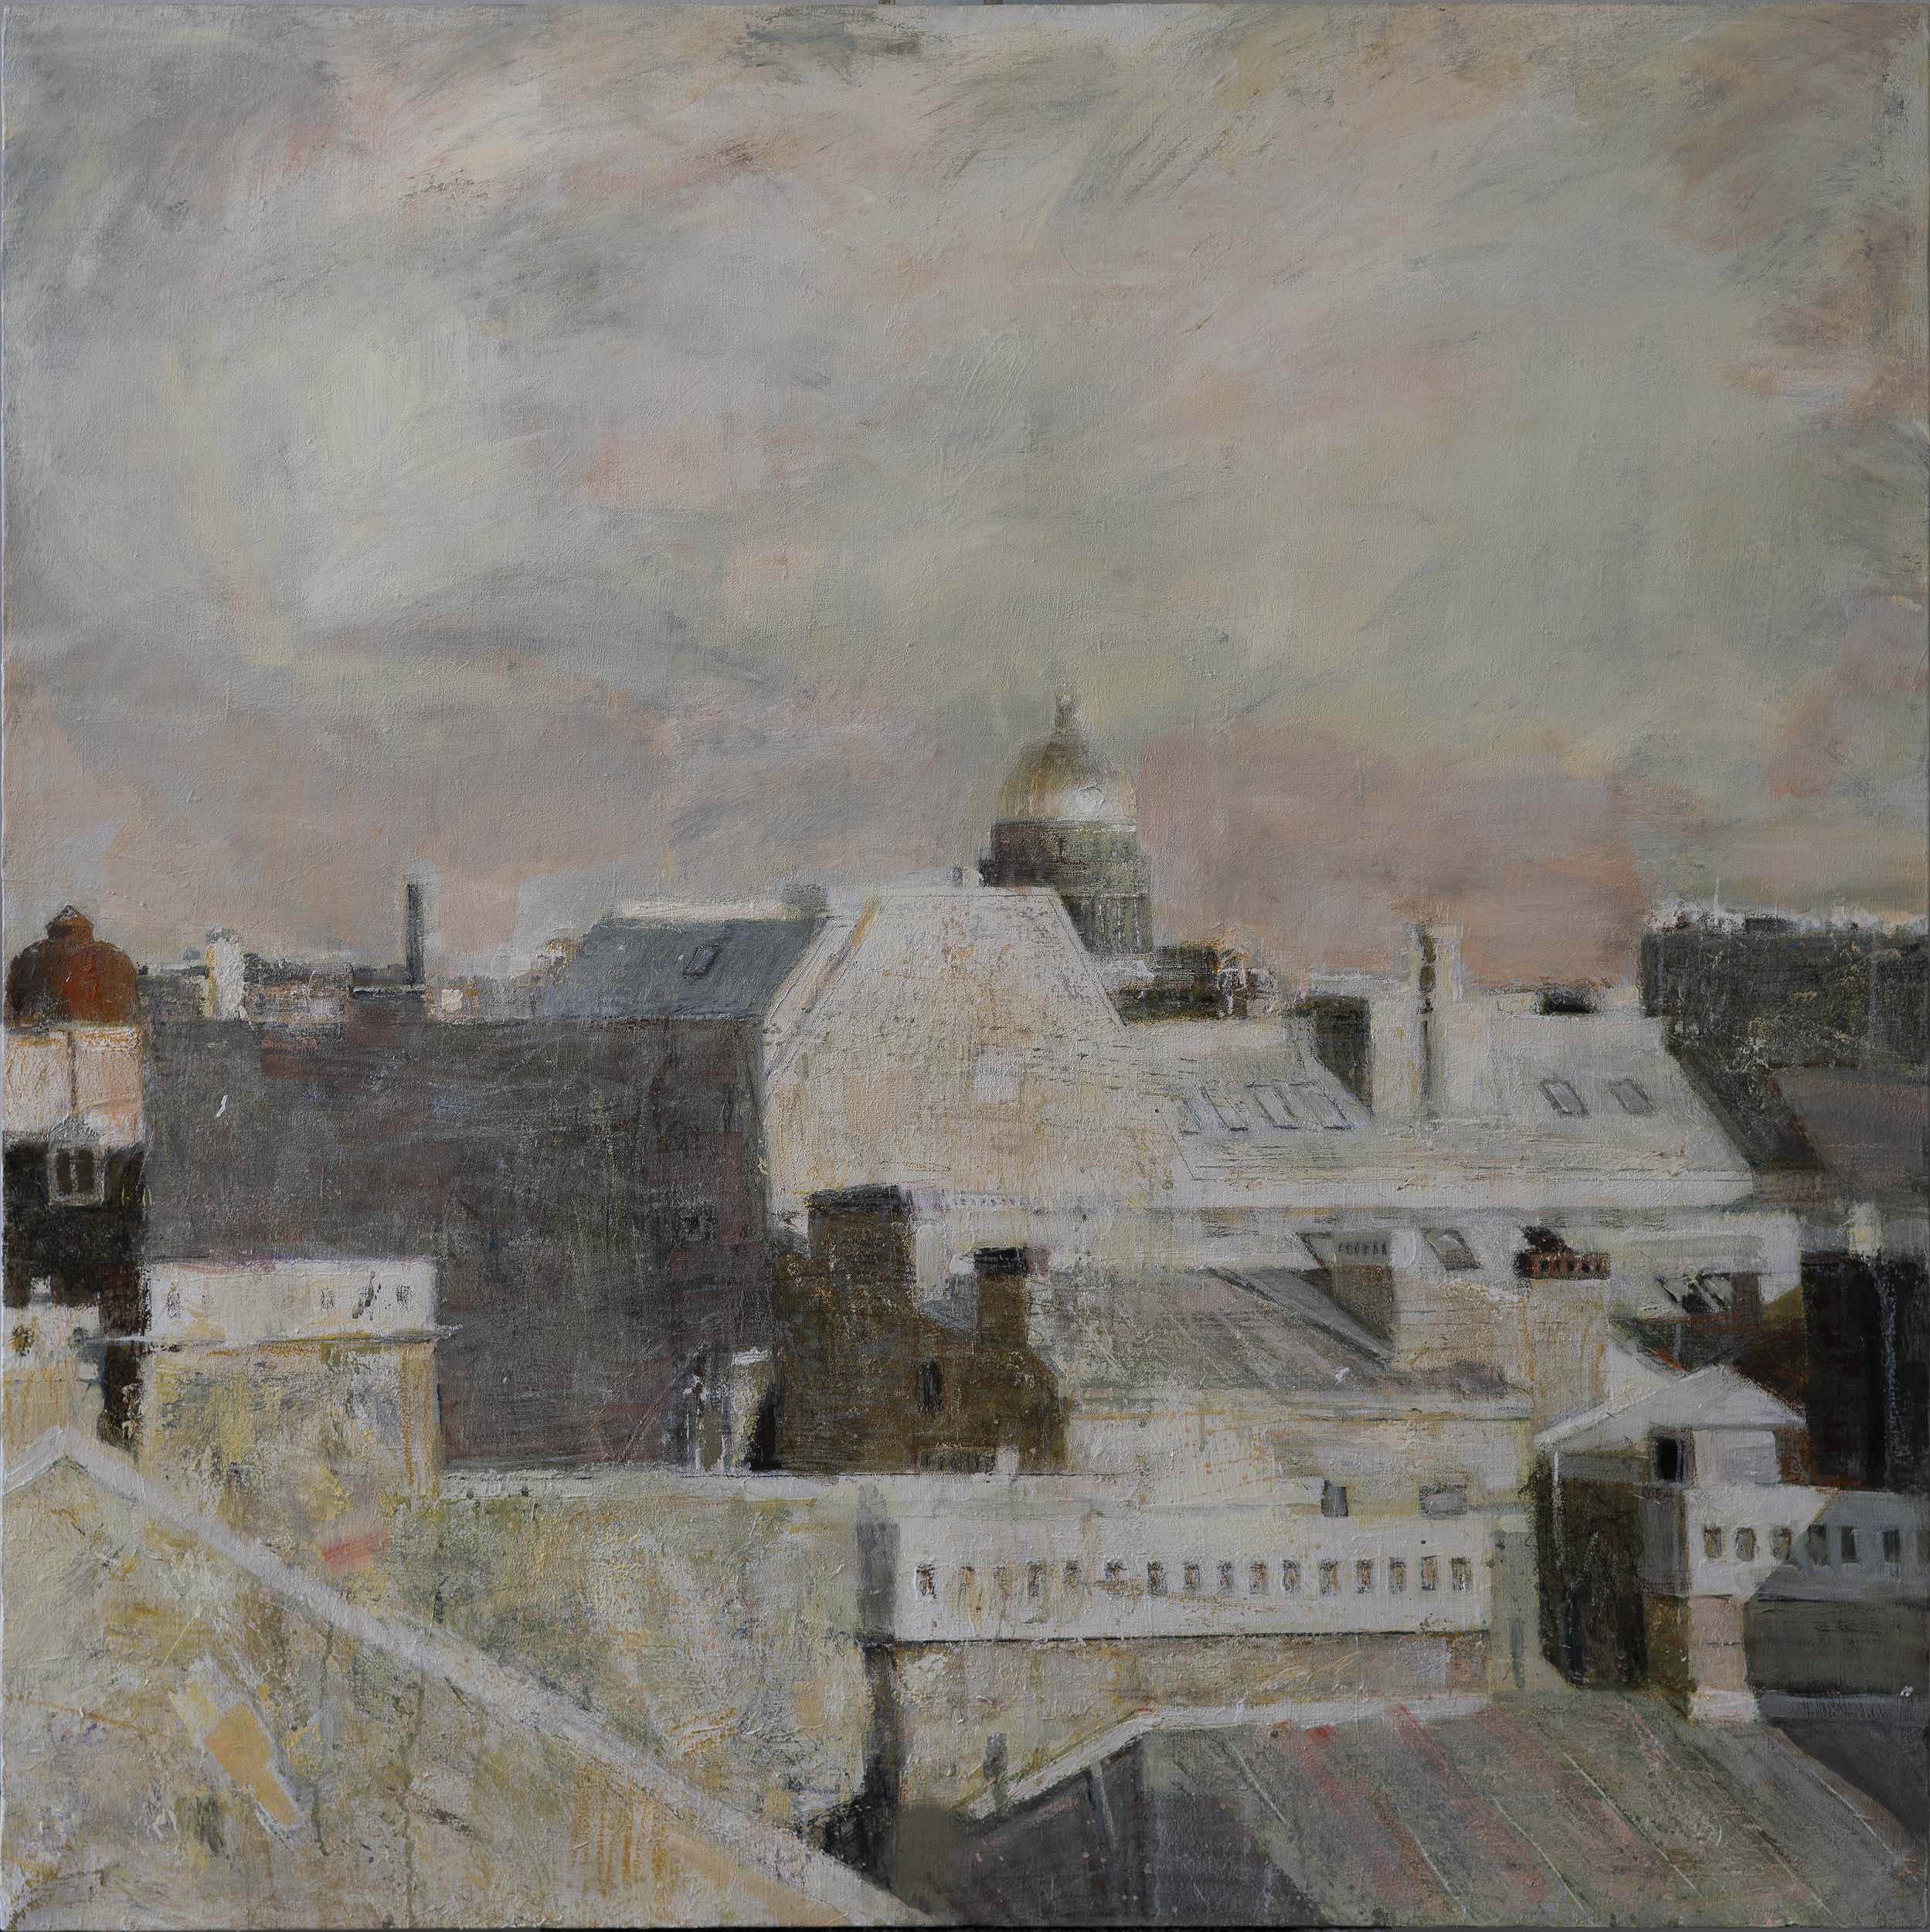 Roofs - 1, Yuri Pervushin, Buy the painting Acrylic